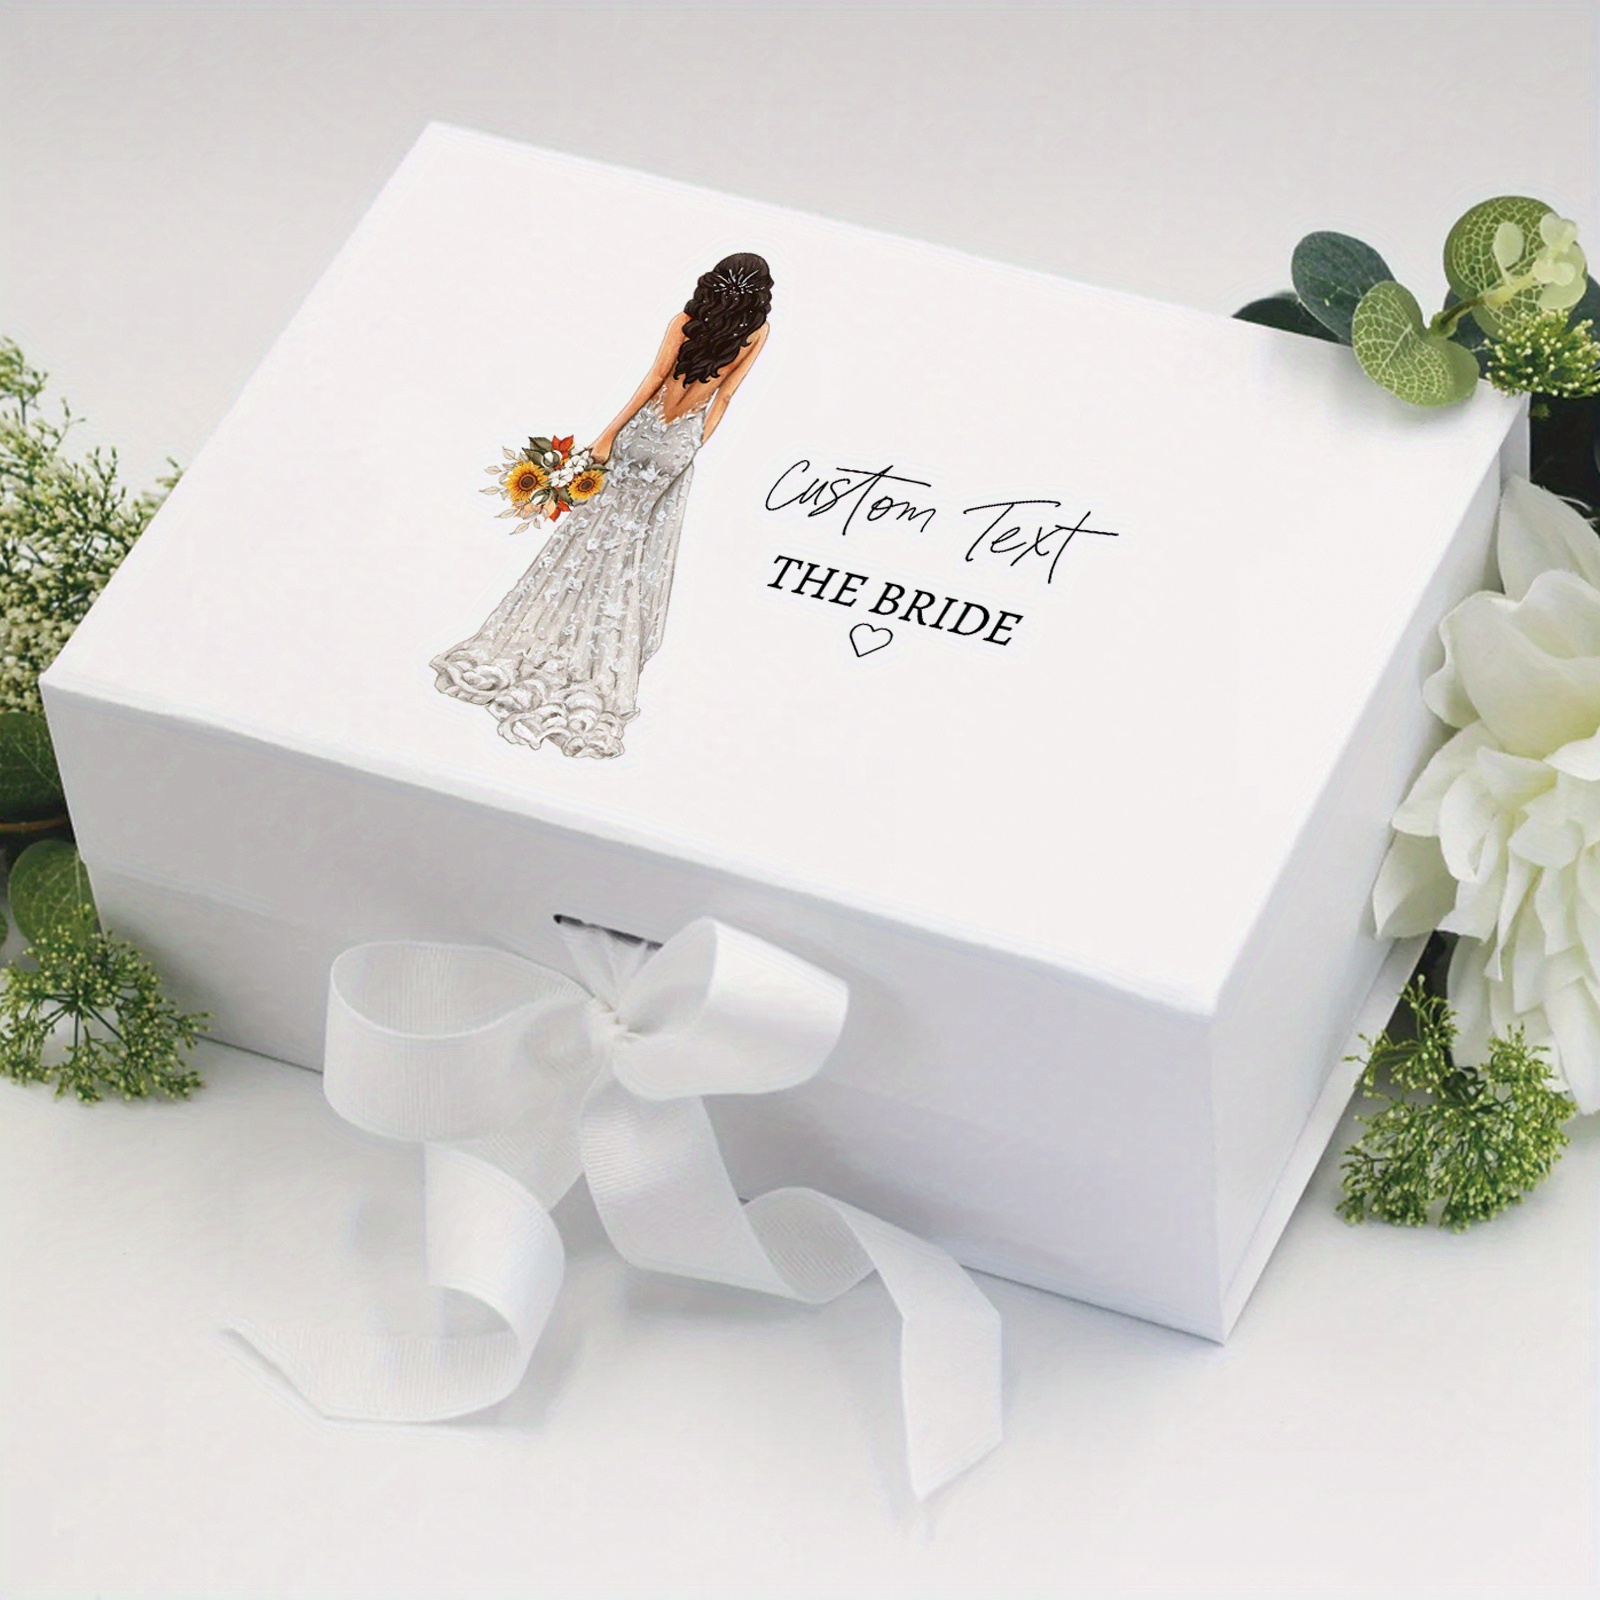 

Custom Mr & Mrs Wedding Keepsake Gift Box - Personalized Just Married Bride And Groom Present